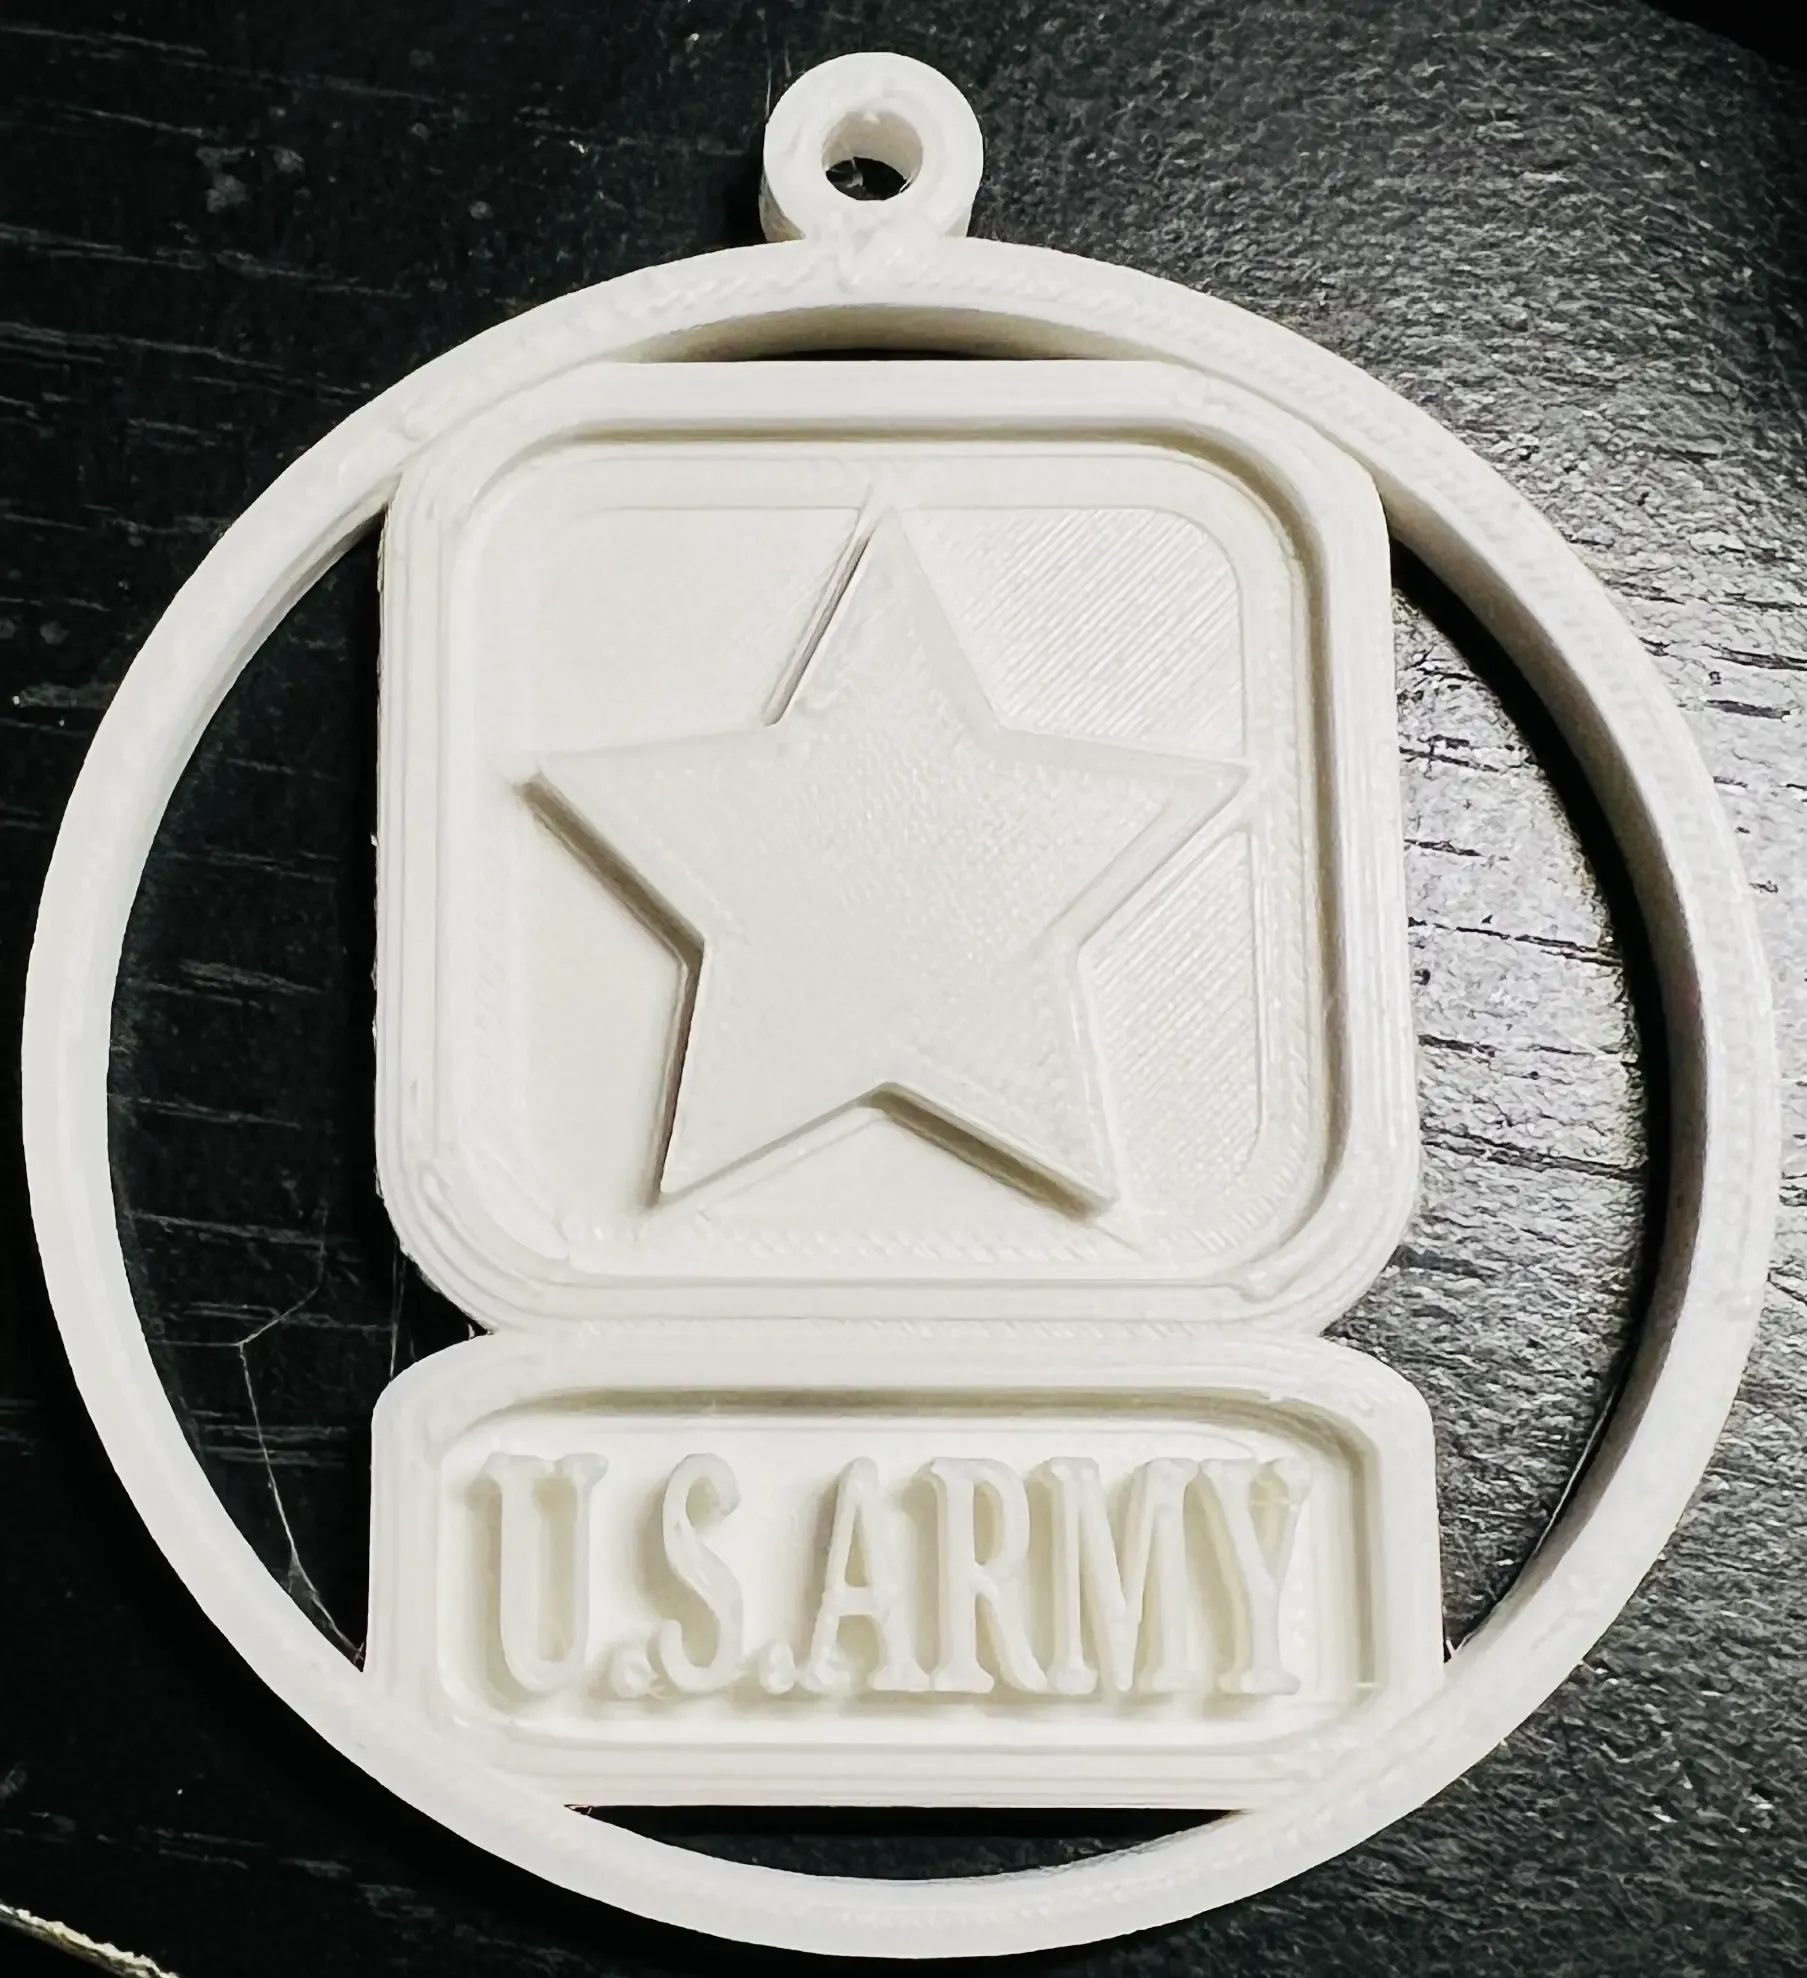 U S Army Christmas Ornament.